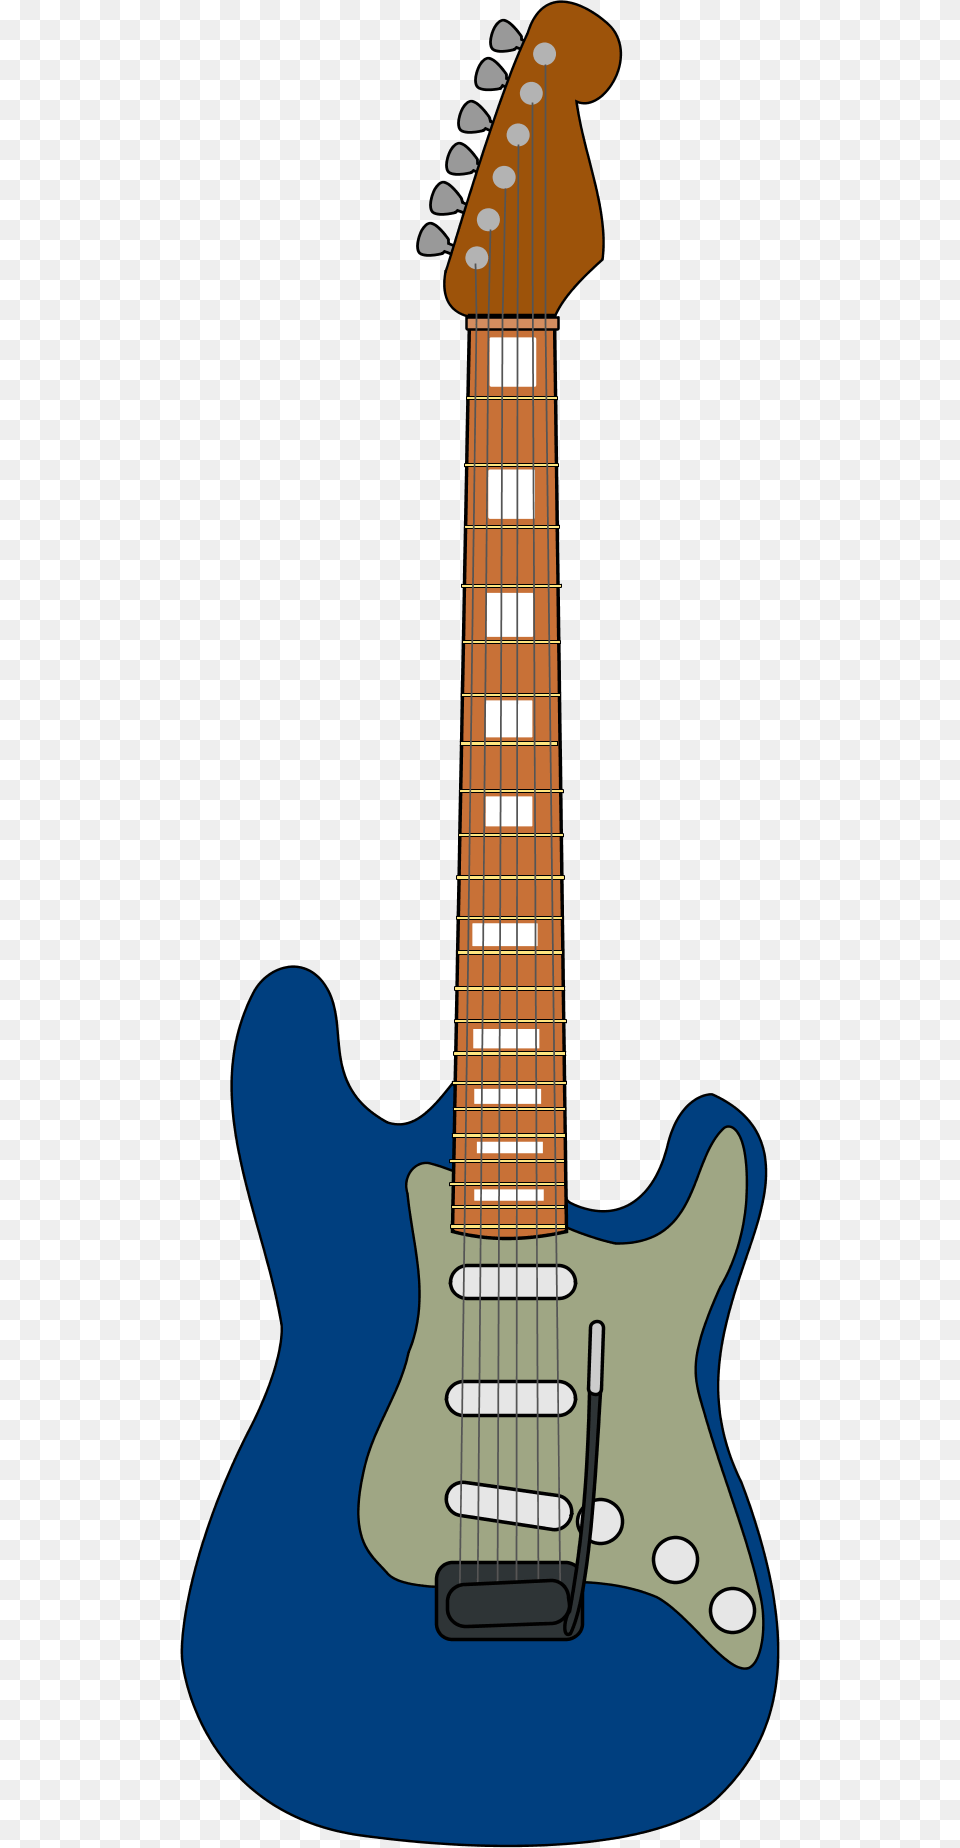 Wooden Guitar Vector Clip Art Electric Guitar Clipart, Bass Guitar, Musical Instrument, Electric Guitar Png Image